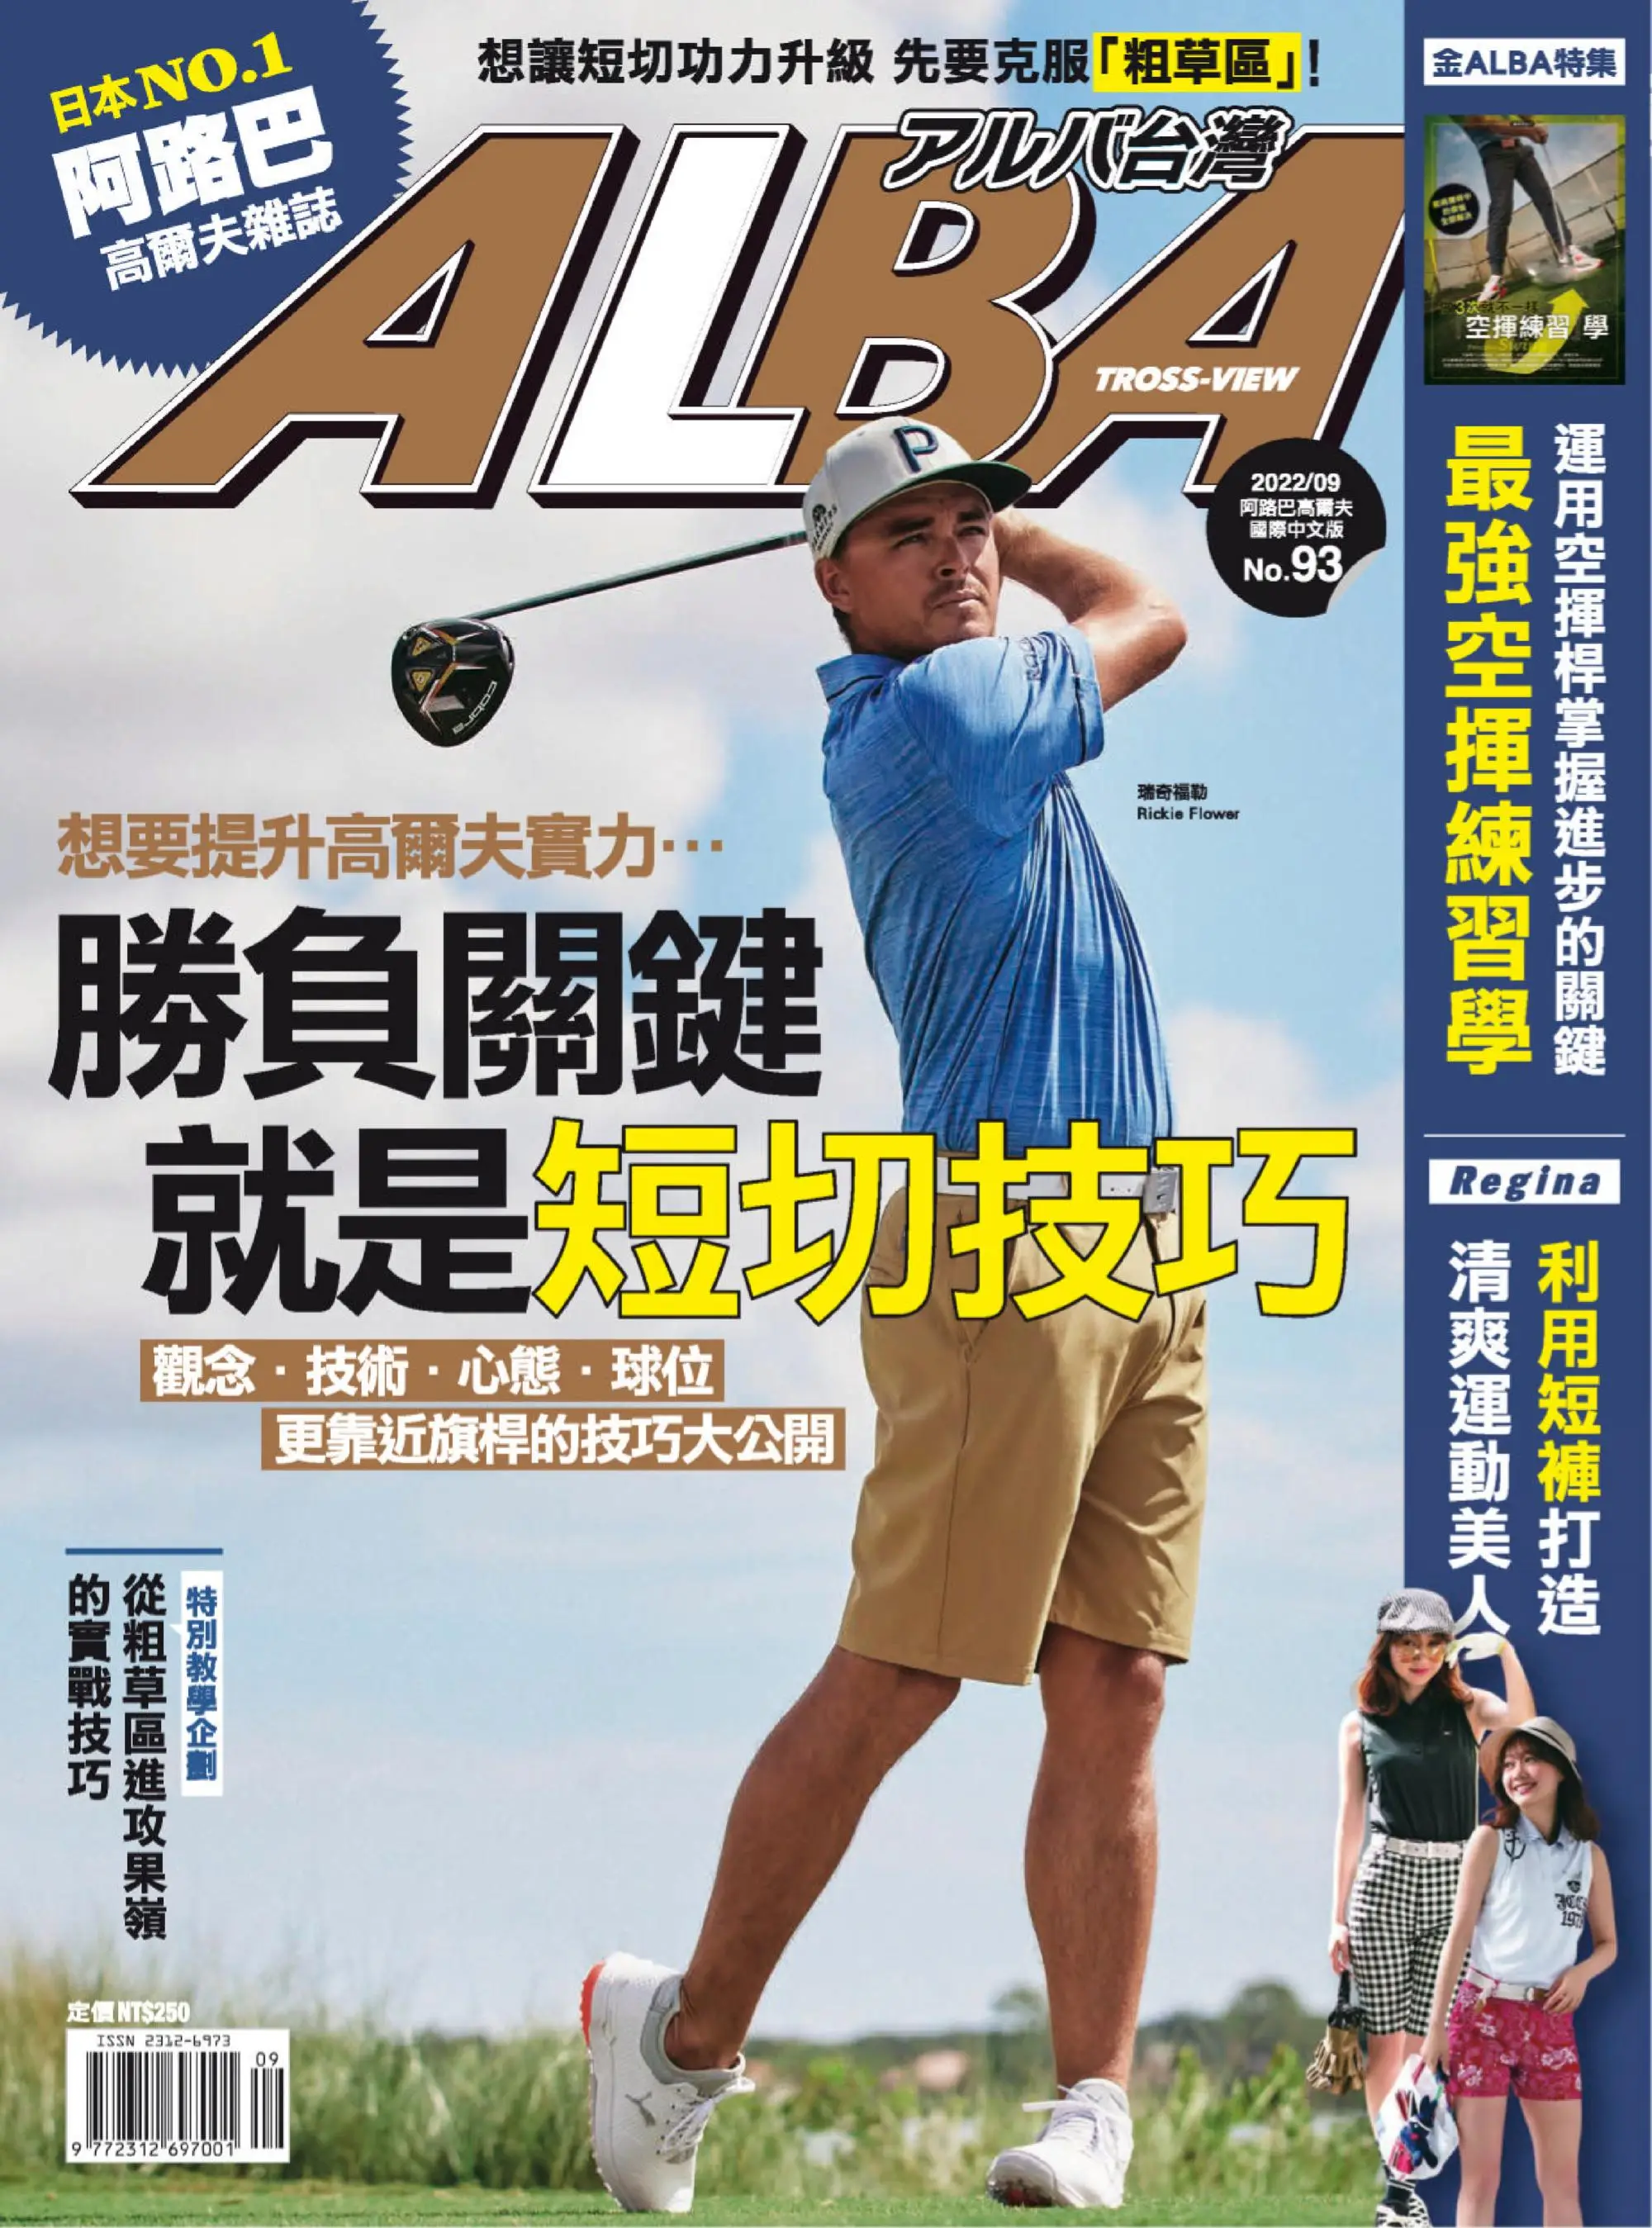 Alba Tross-View 阿路巴高爾夫 國際中文版 2022年31 八月